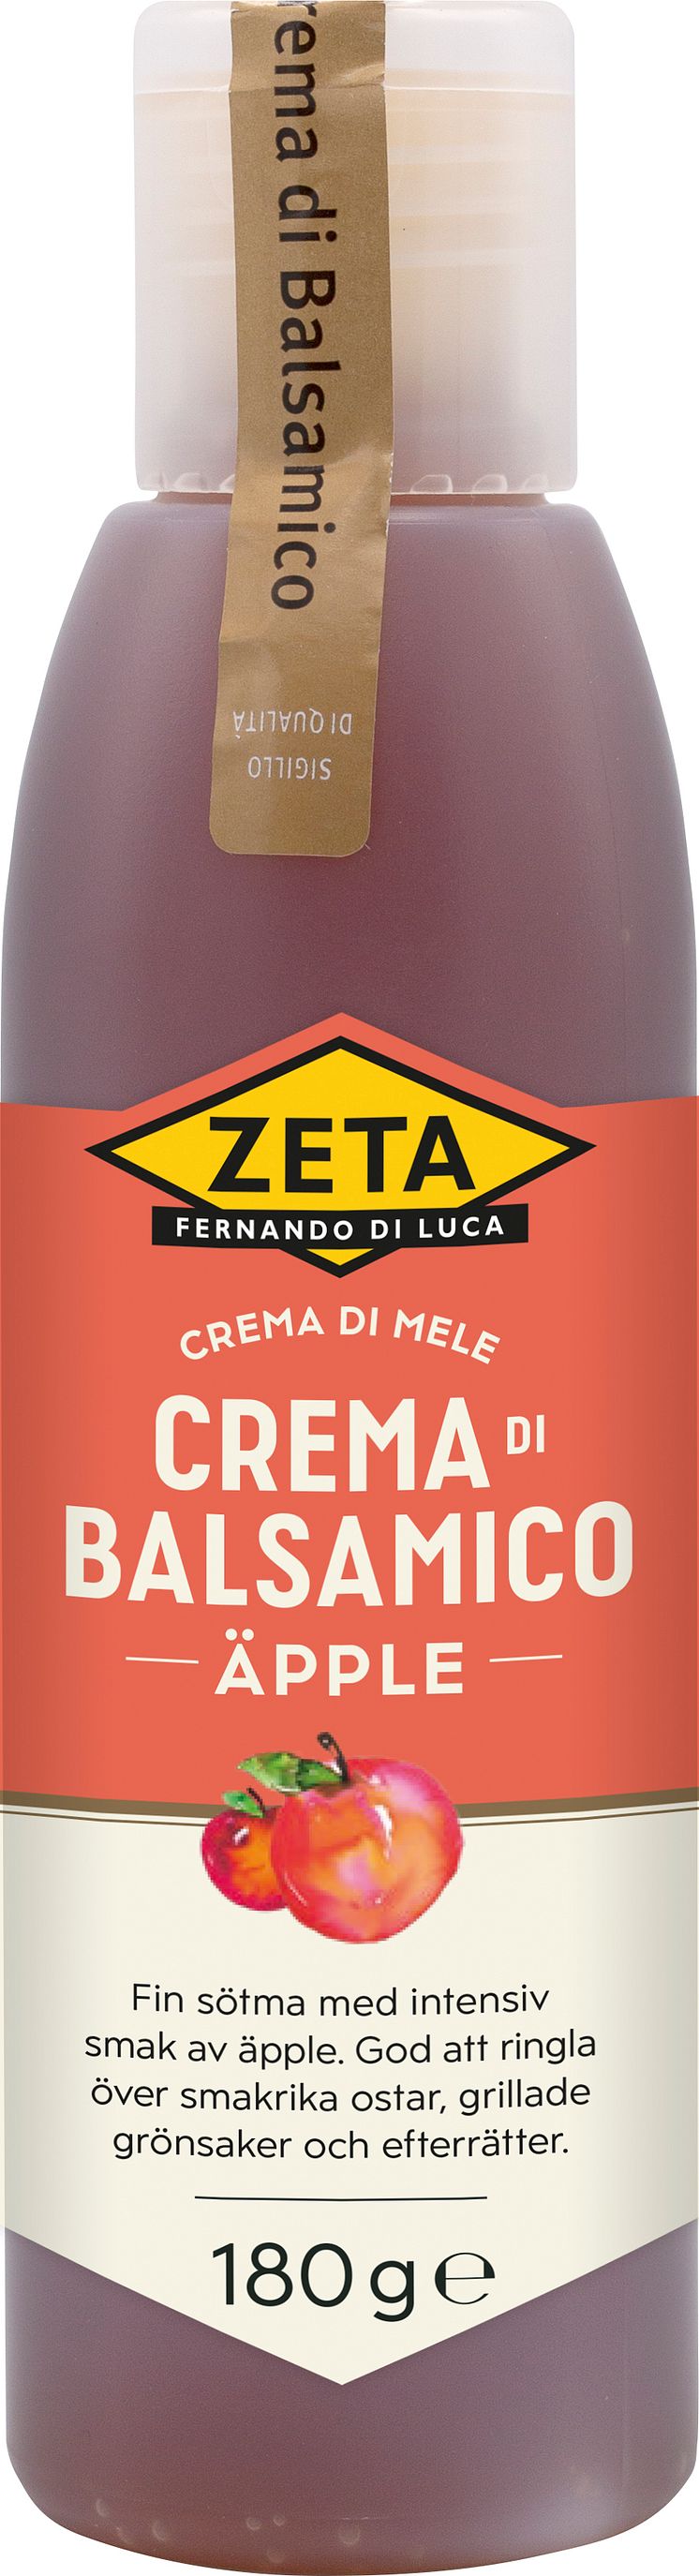 Produktbild Zeta Crema di Balsamico, 180 g